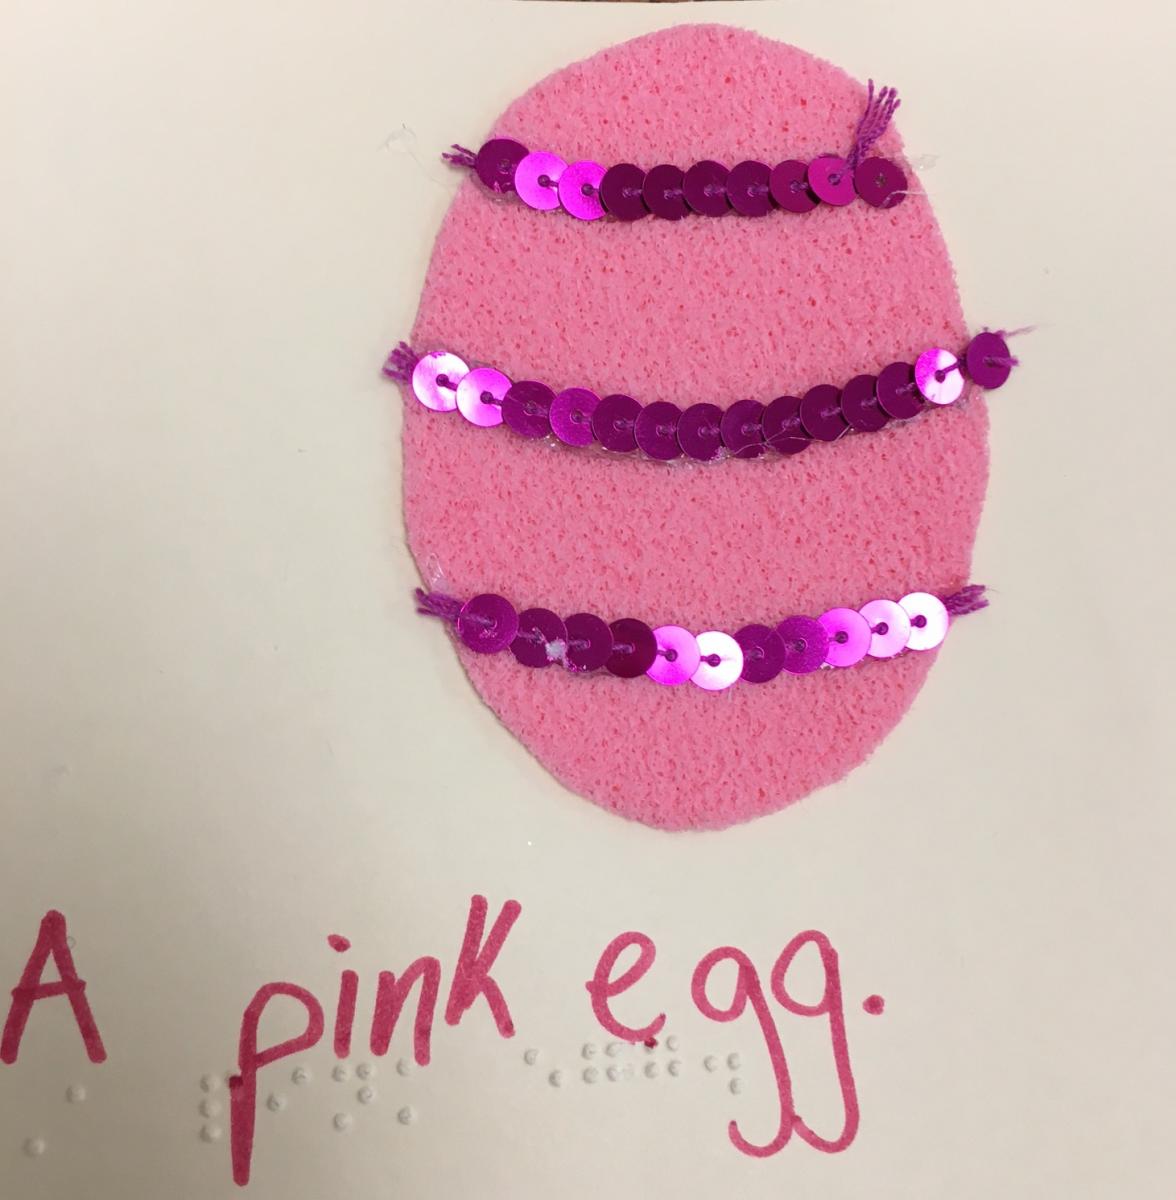 A pink egg